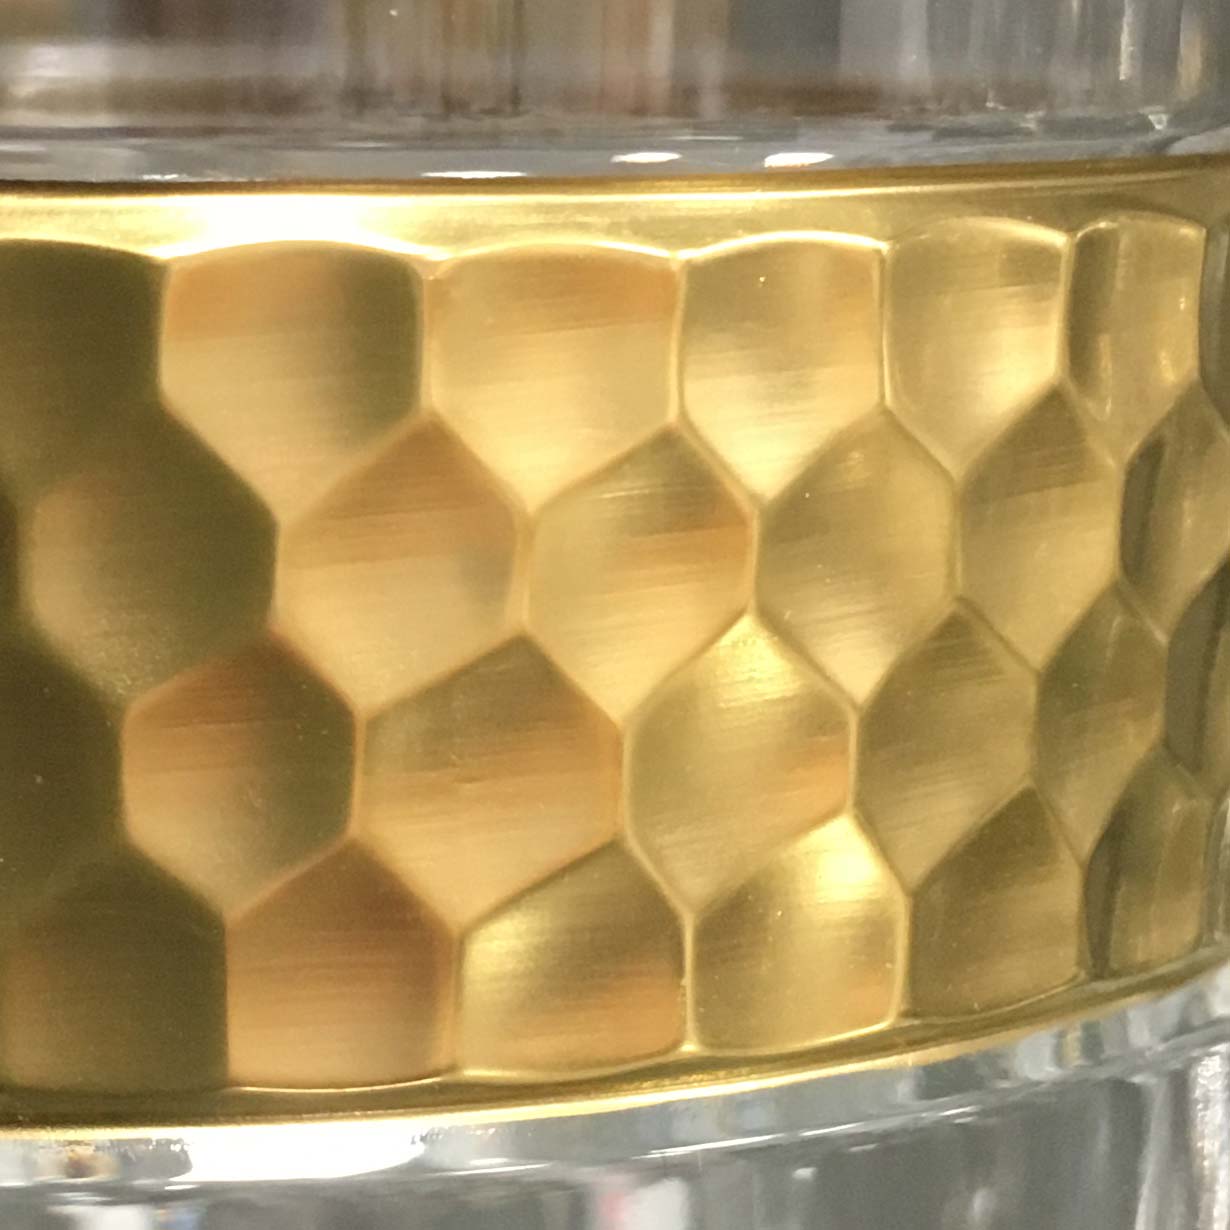 Cognacglas Kristall Bloom Gold clear (10,6 cm)